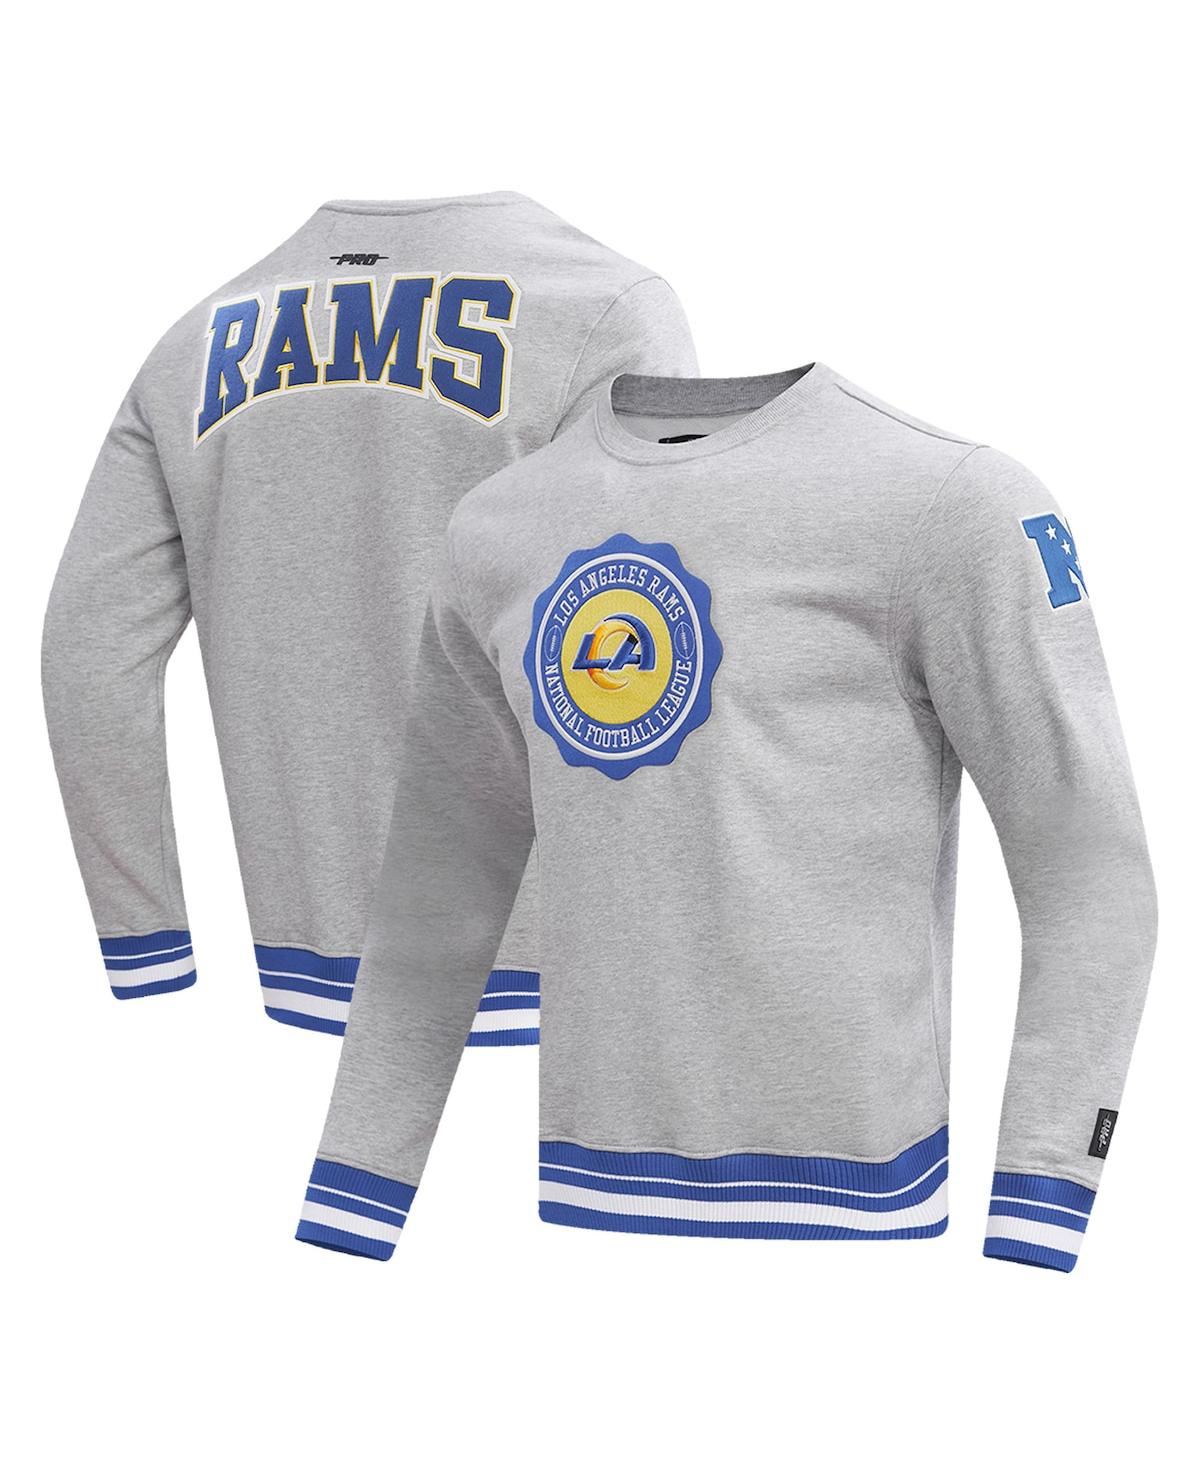 Shop Pro Standard Men's  Heather Gray Los Angeles Rams Crest Emblem Pullover Sweatshirt